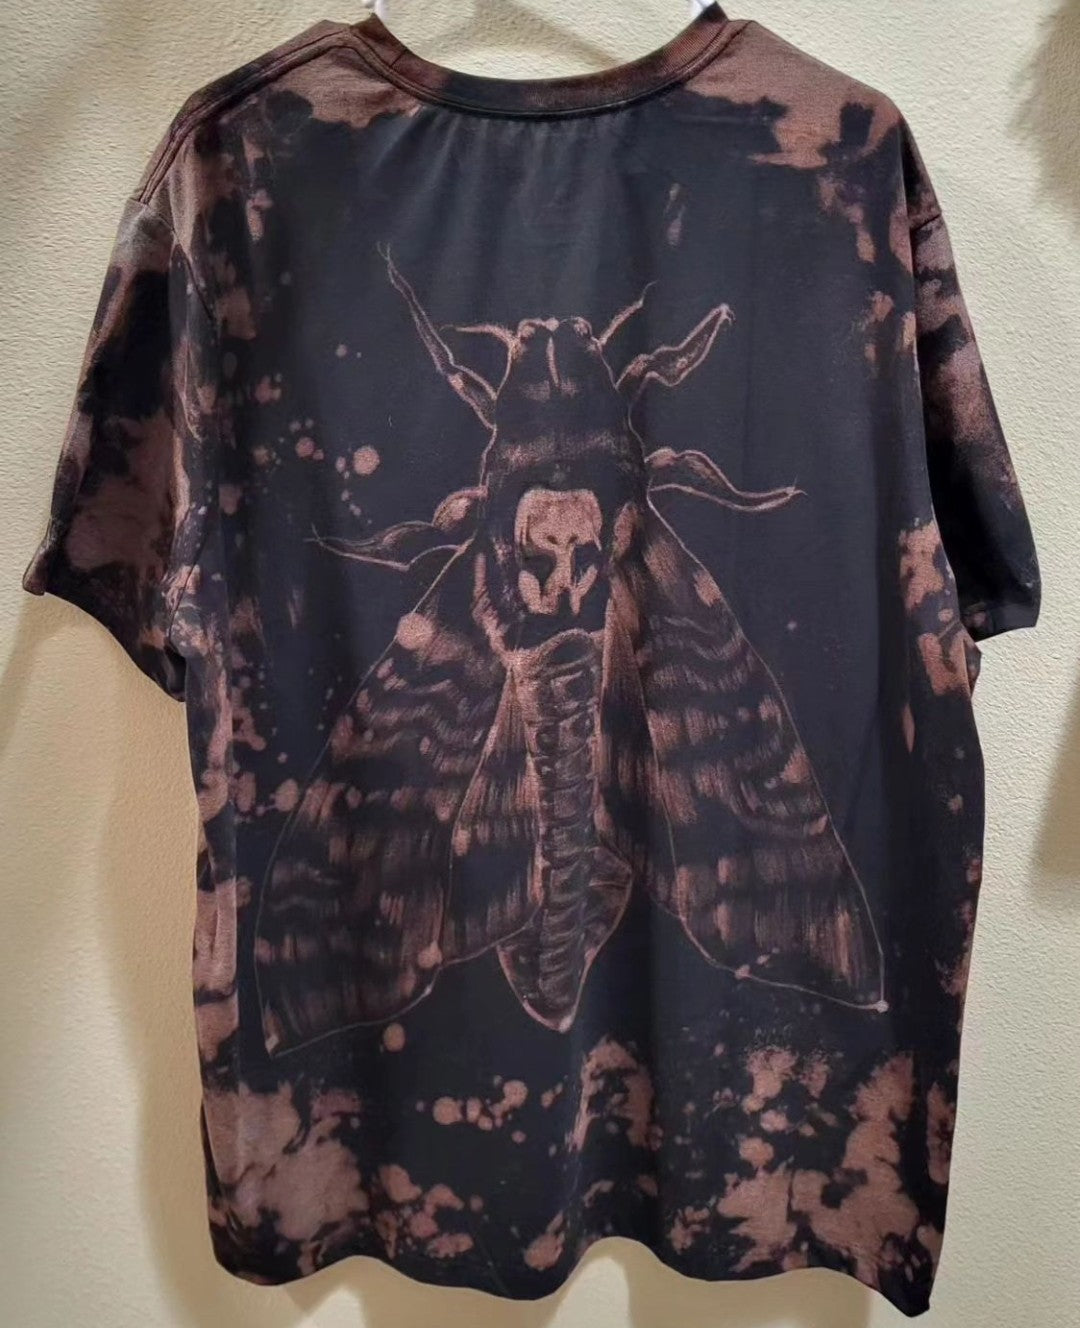 Tye-dye moth shirt